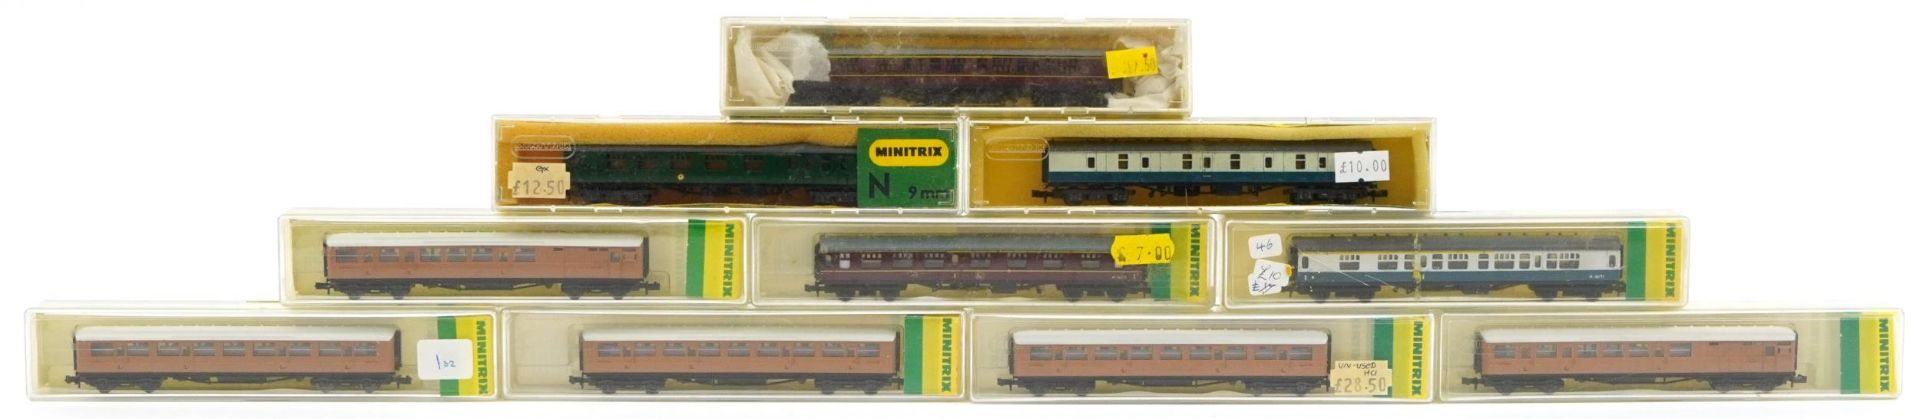 Ten Minitrix N gauge model railway carriages with cases, numbers 2926, 2938, 3112, 13003, 13008,